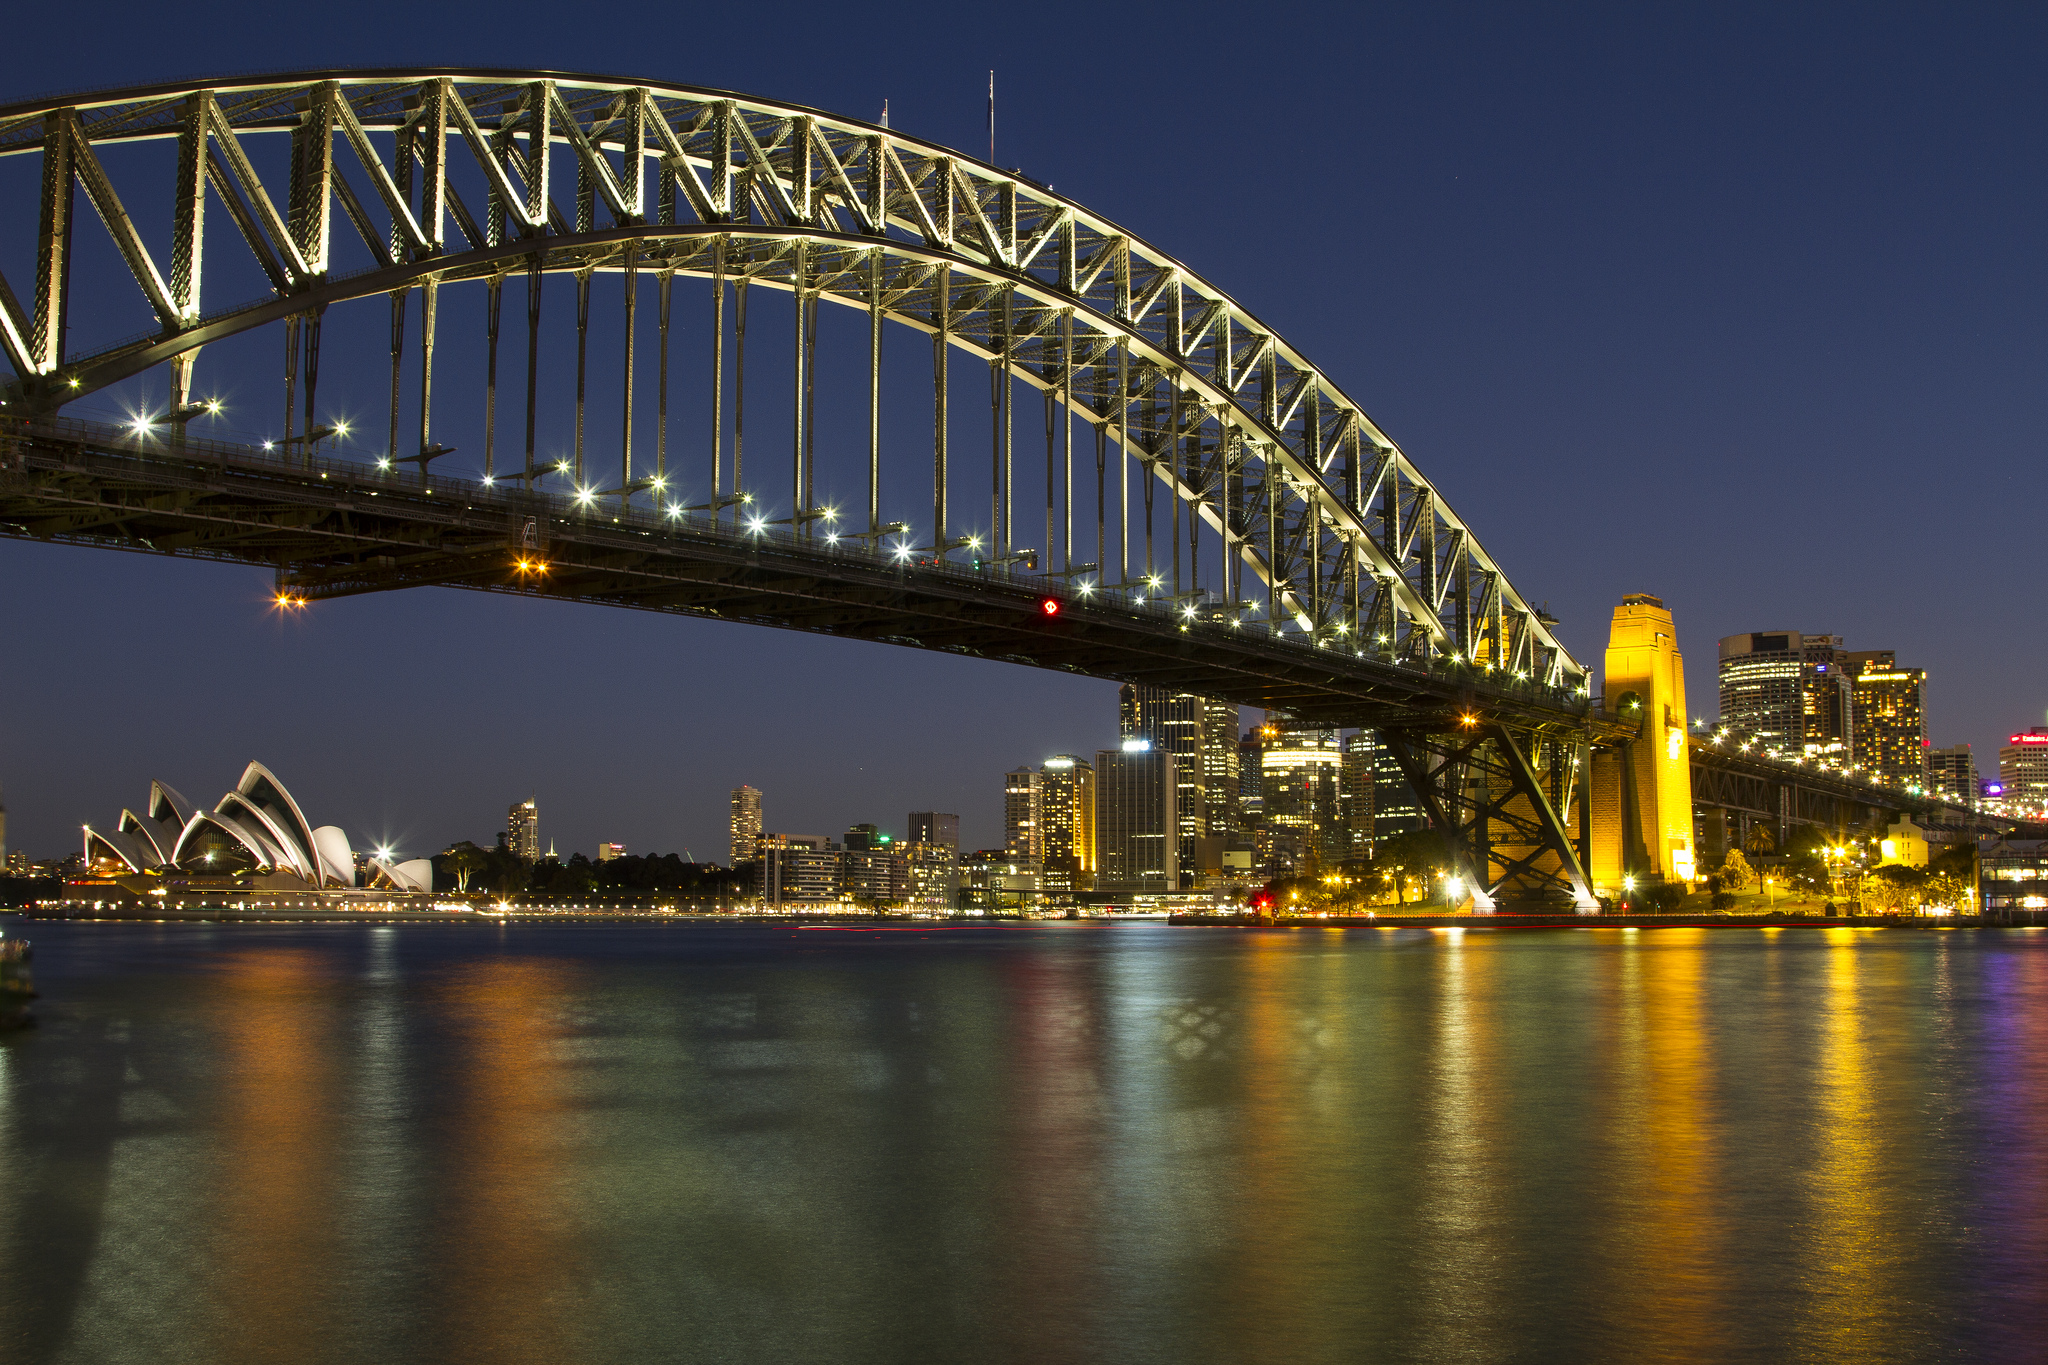 Harbour bridge. Харбор-бридж Сидней. Сиднейский мост Харбор-бридж. Сиднейский мост Харбор-бридж Строитель. Harbour Bridge Австралия.